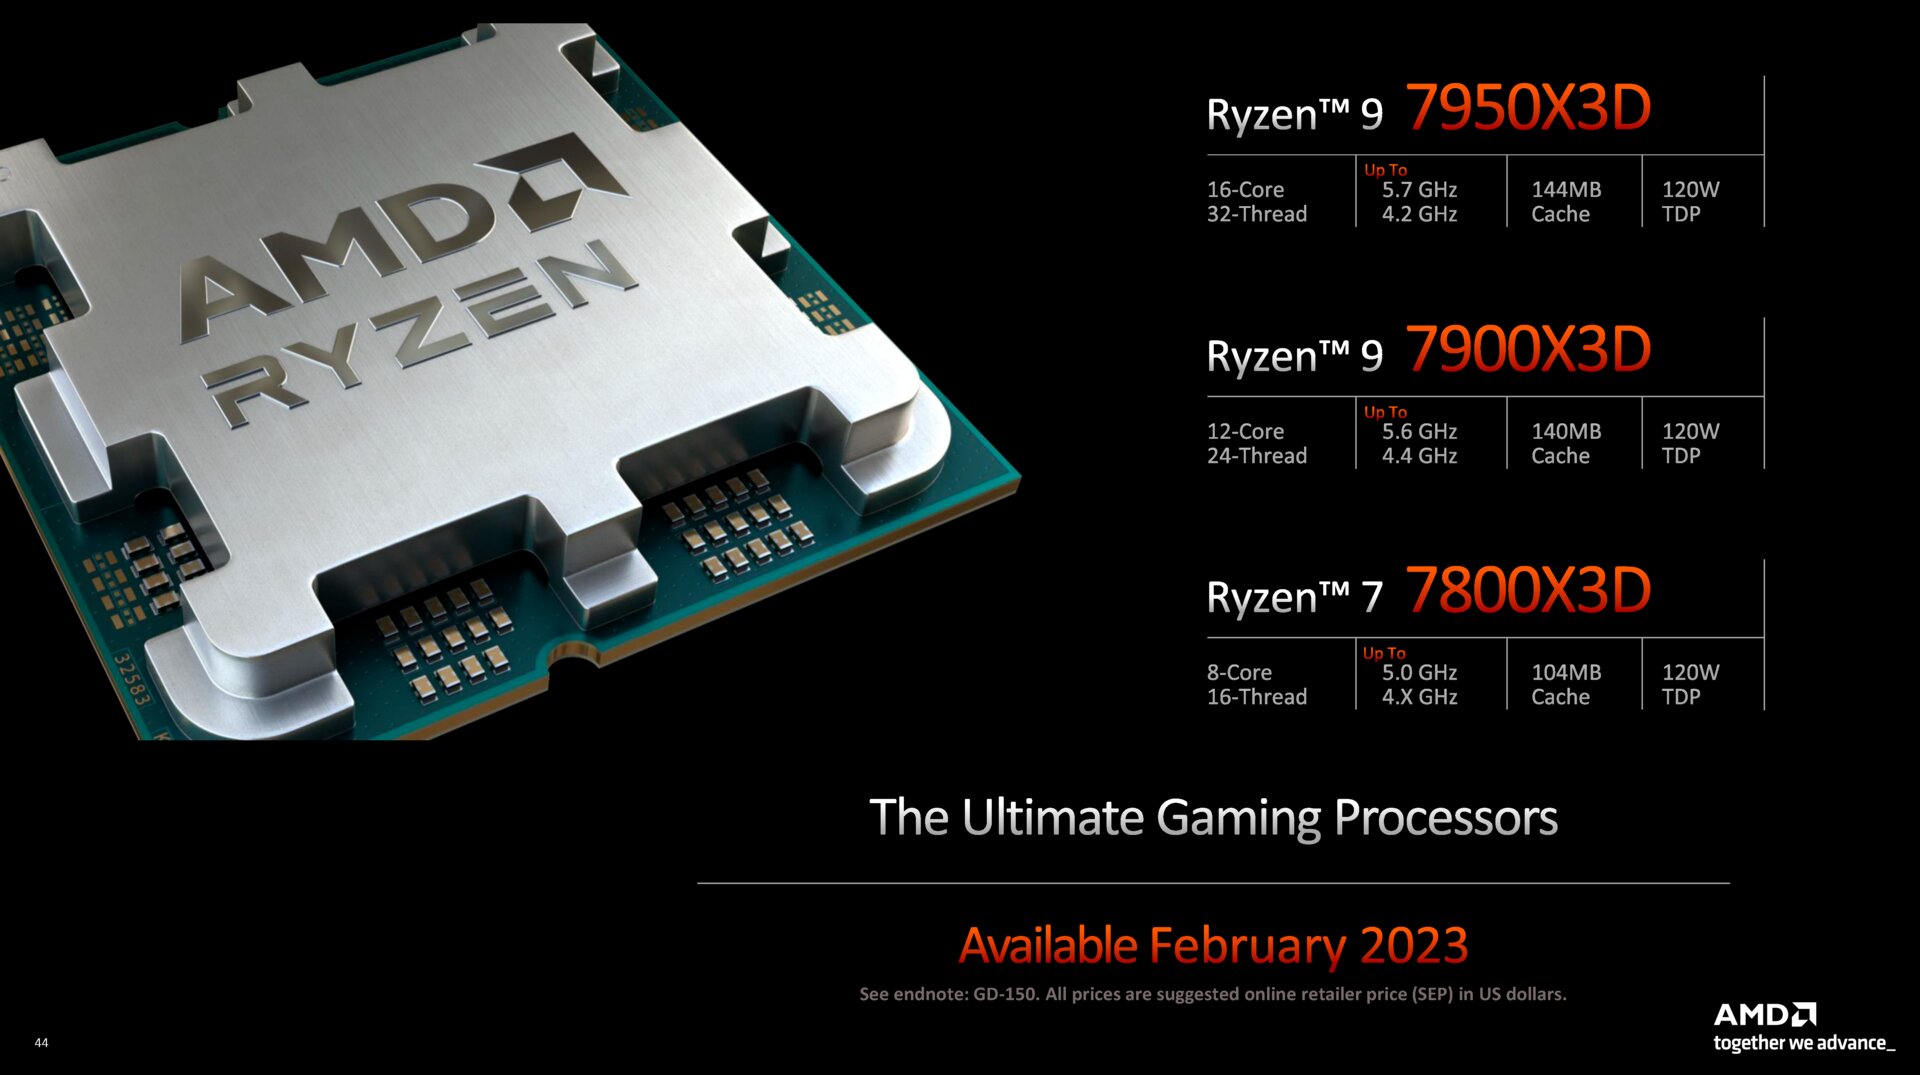 AMD Ryzen 7000X3D series coming February, 16-core Ryzen 9 7950X3D features  144MB cache 